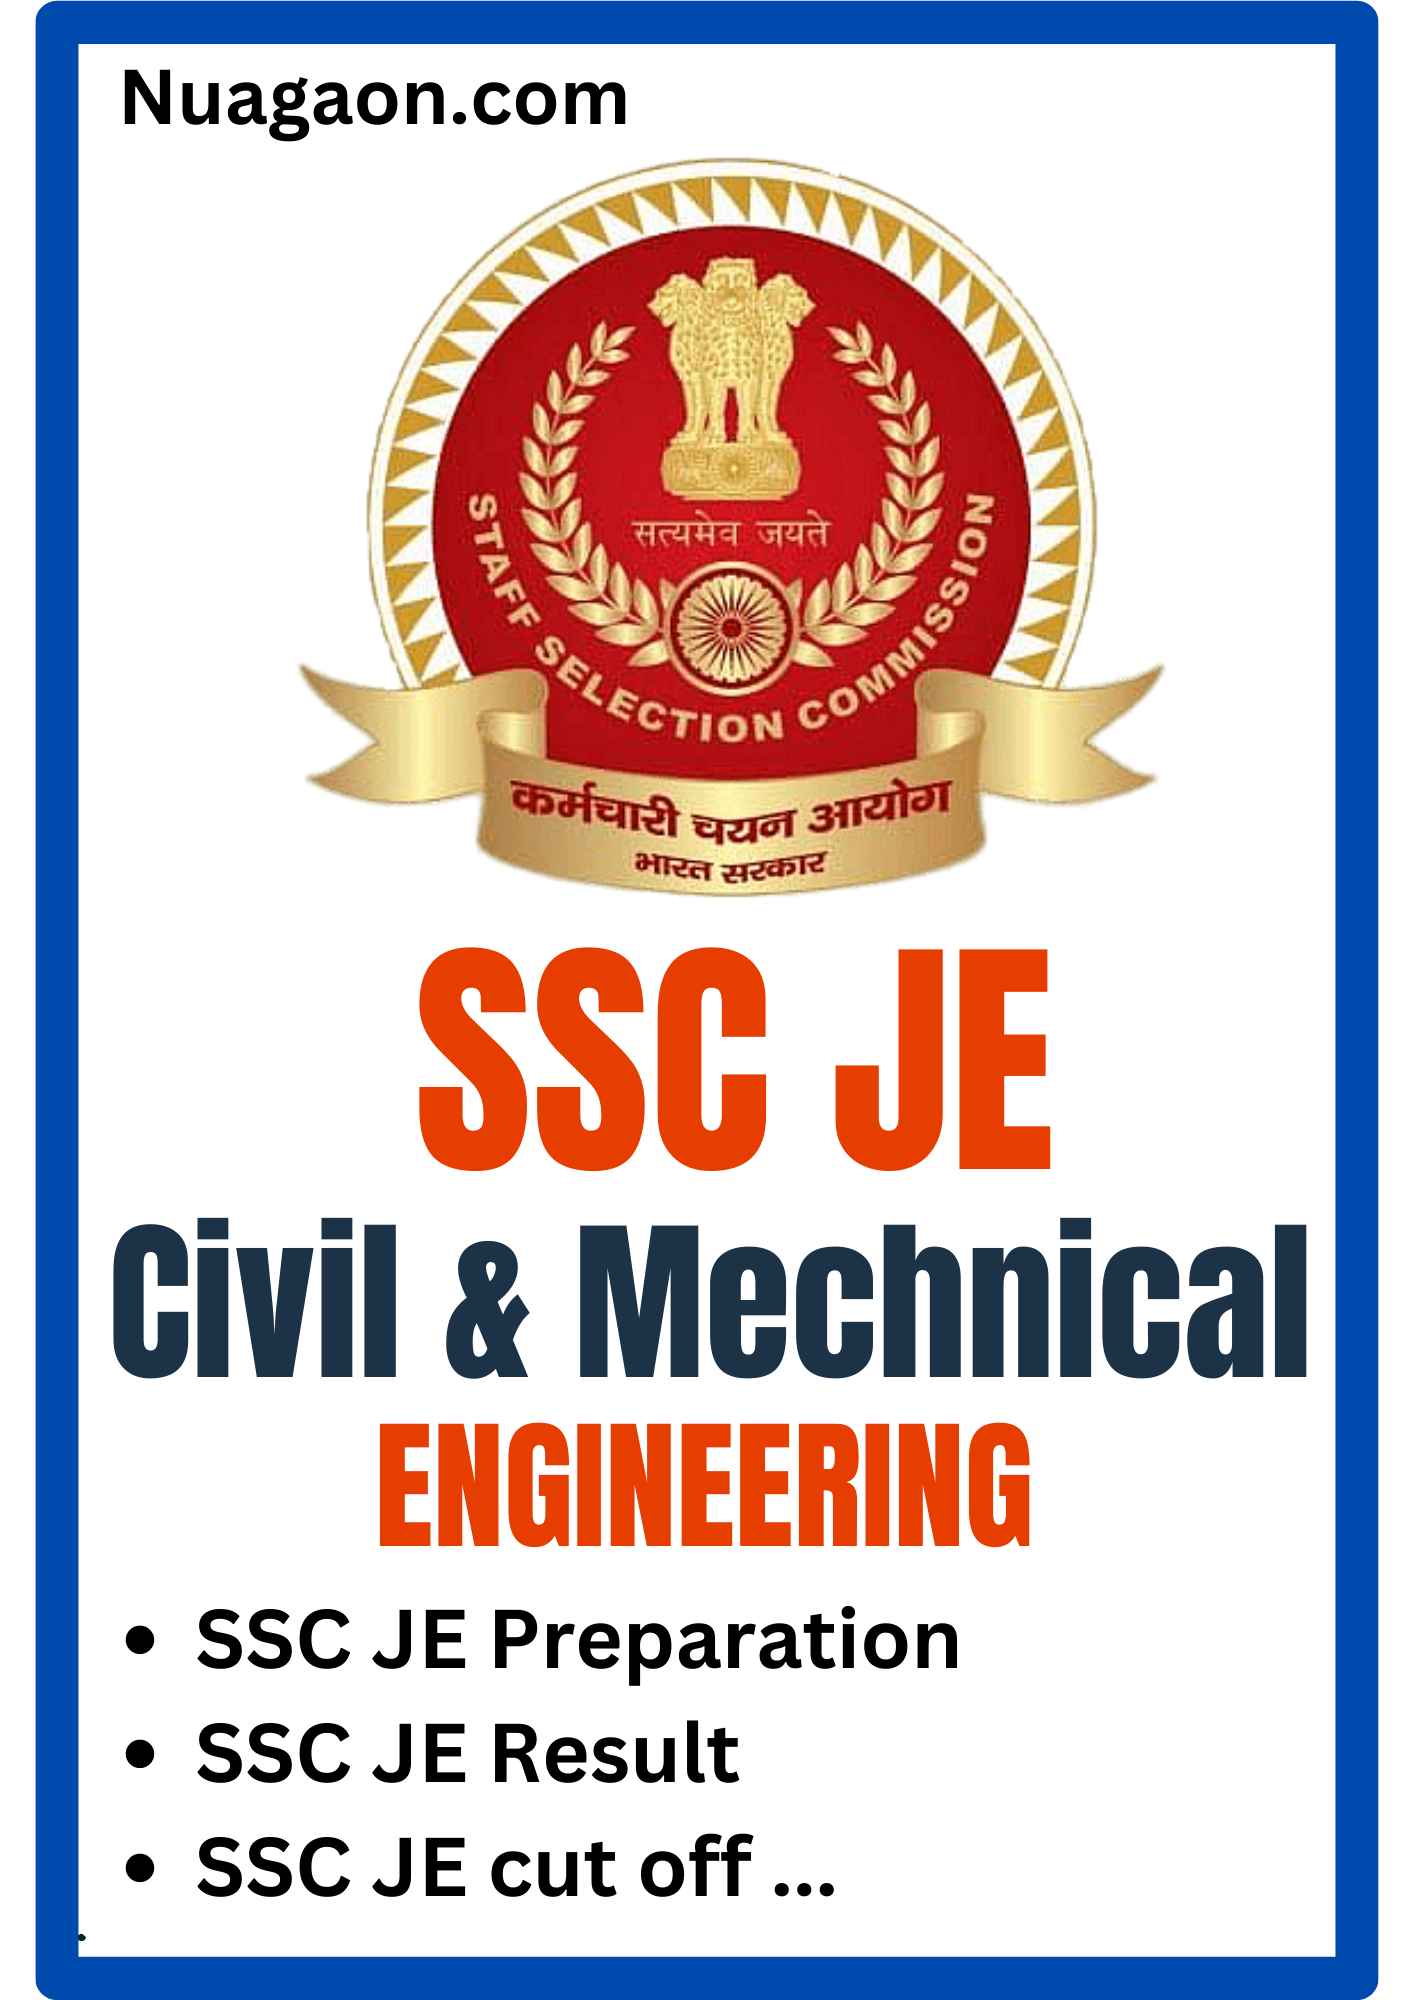 SSC JE Preparation, SSC JE Result, SSC JE cut off-For Civil & Mechanical Engineering